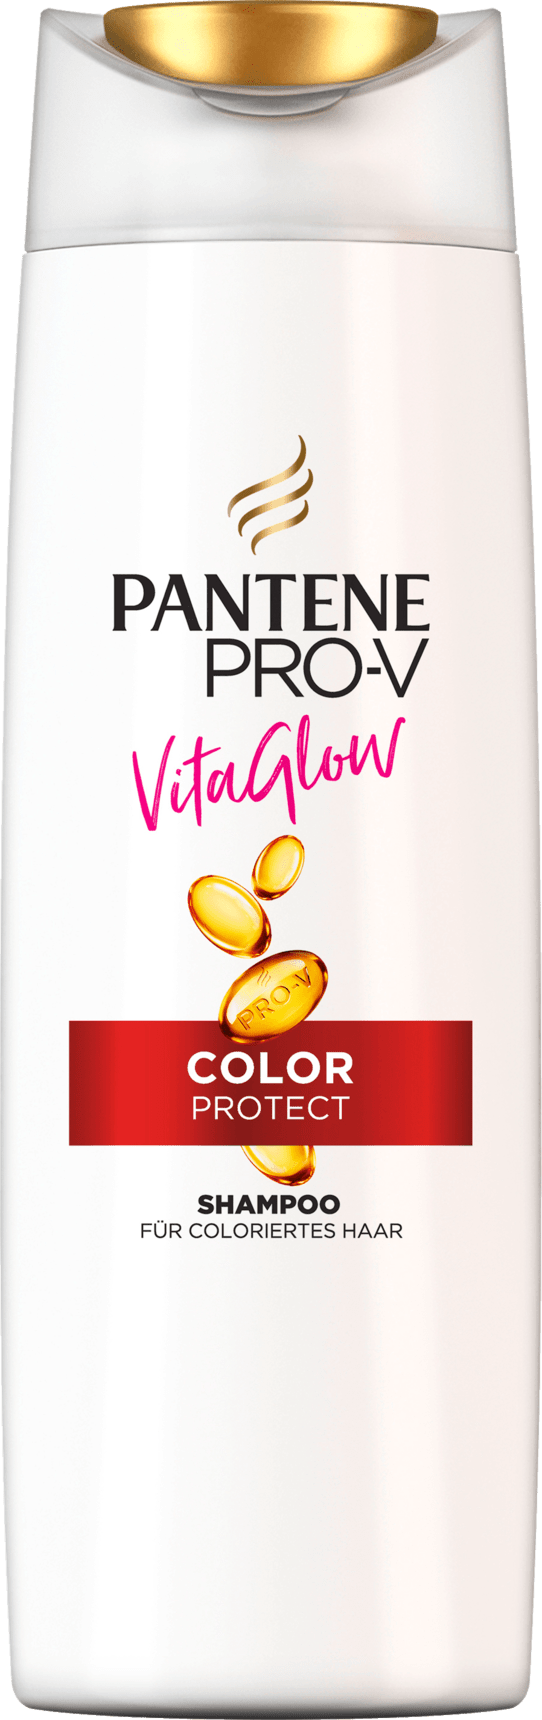 PANTENE PRO-V Shampoo Vita Glow Color Protect, 300 Ml